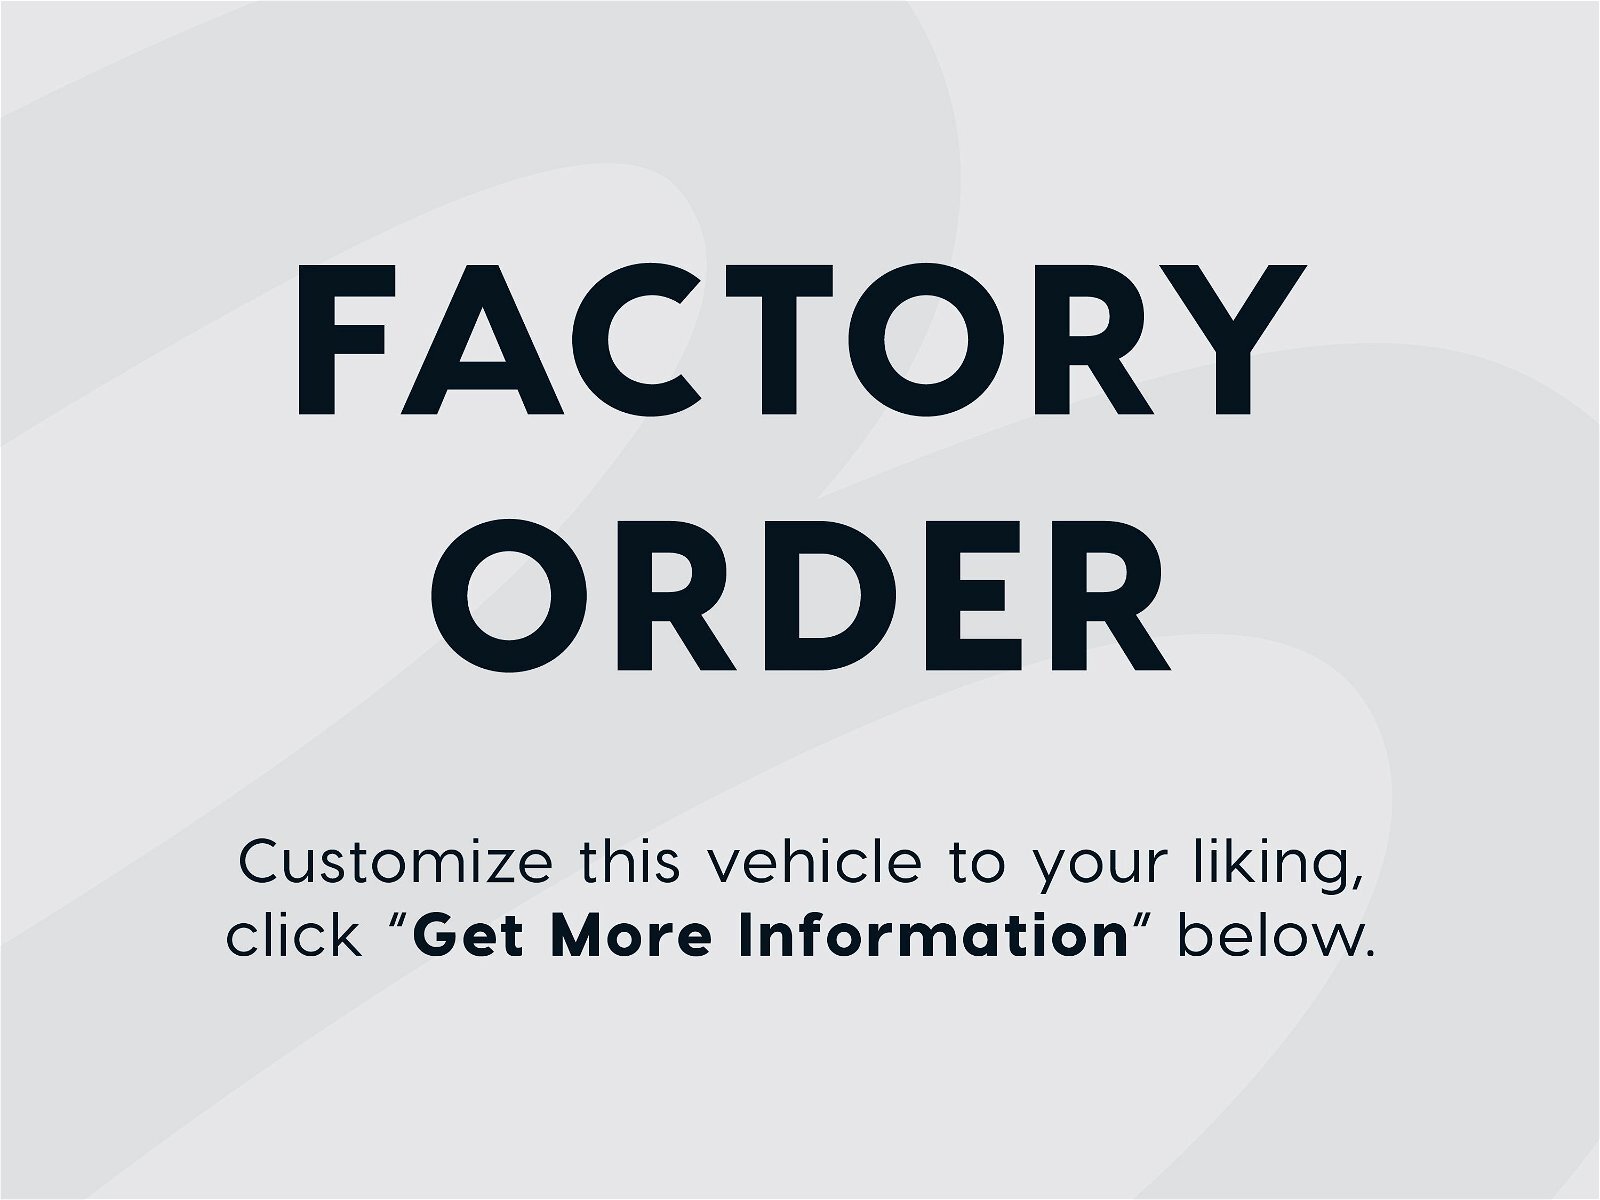 2024 Kia Sportage X-Line Limited Factory Order: Custom